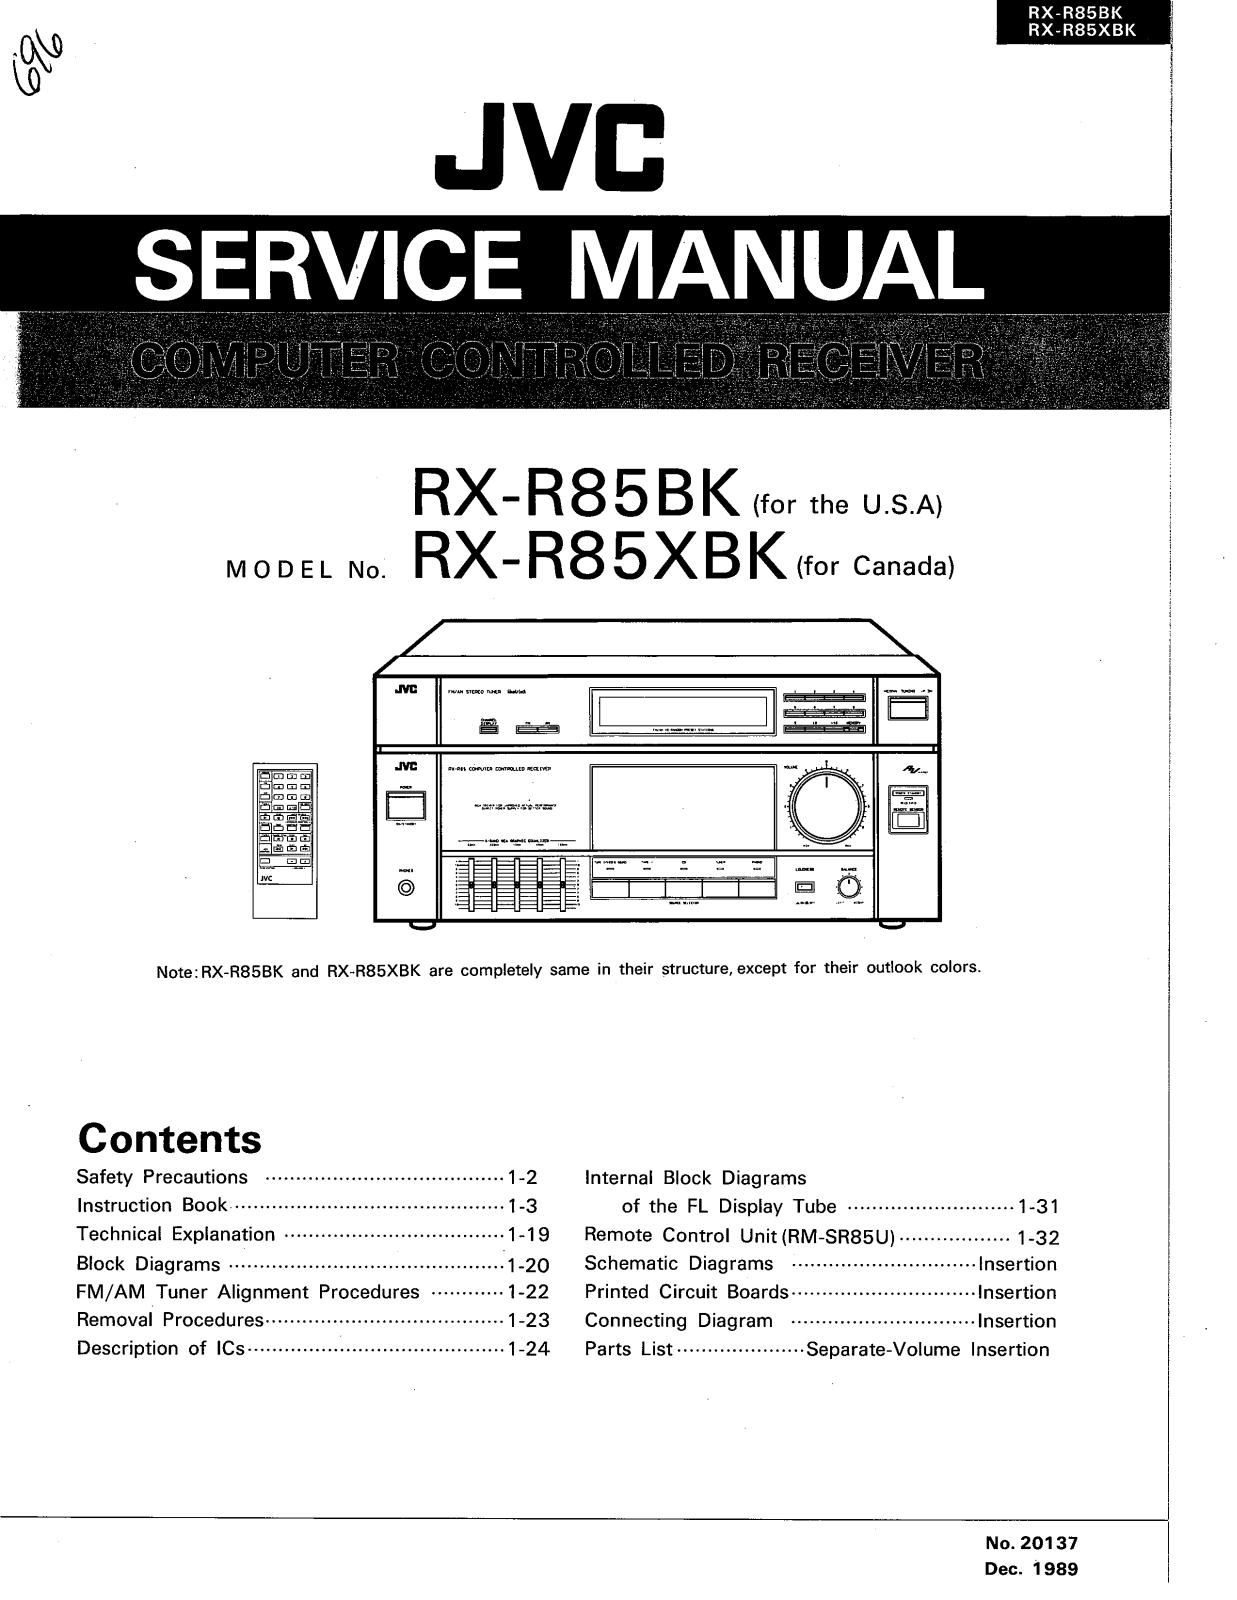 JVC RXR-85-BK Service manual